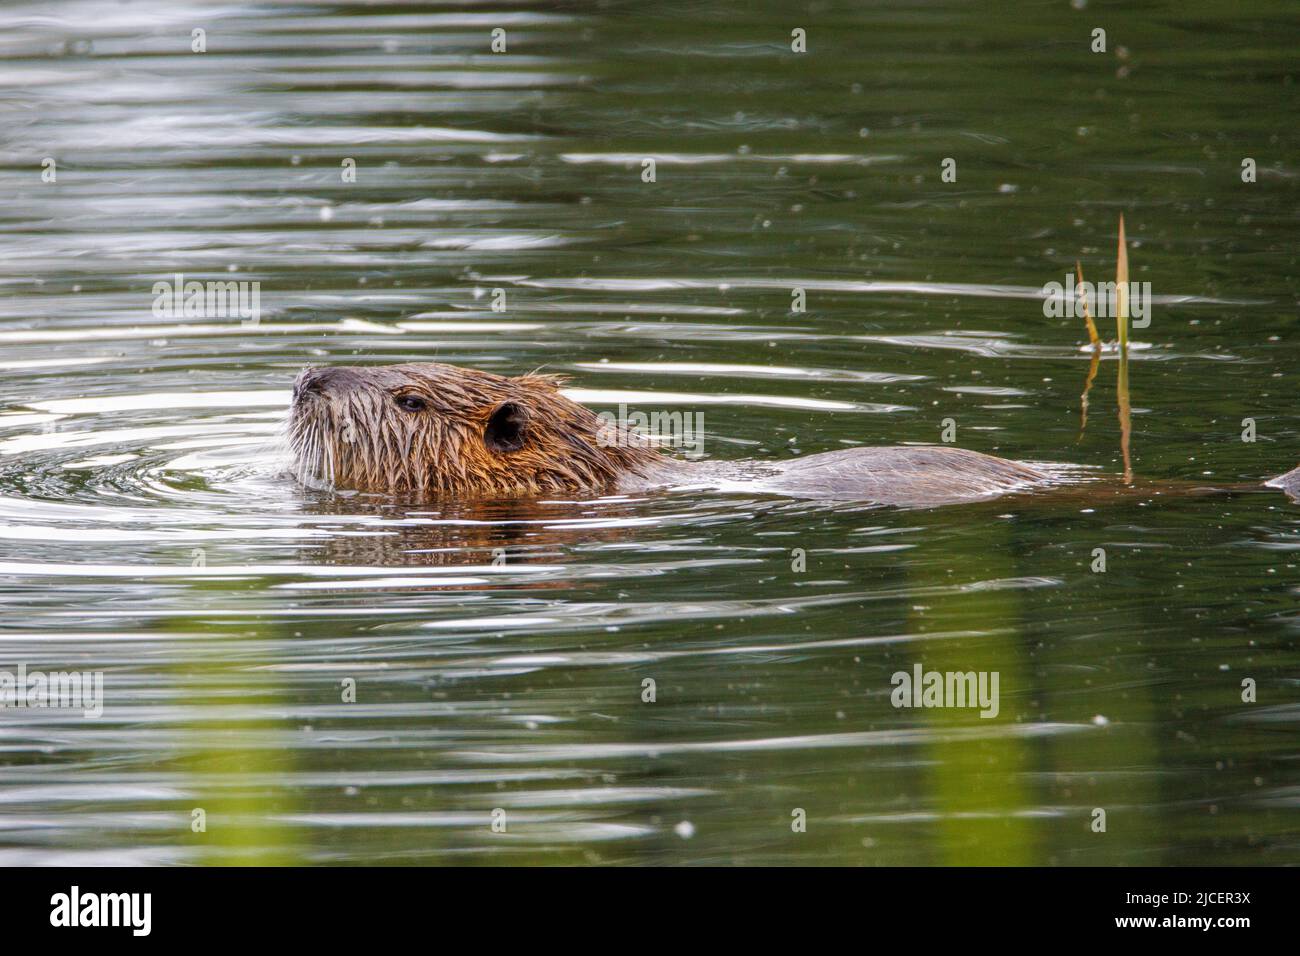 una nutria marrone nuota su un lago Foto Stock